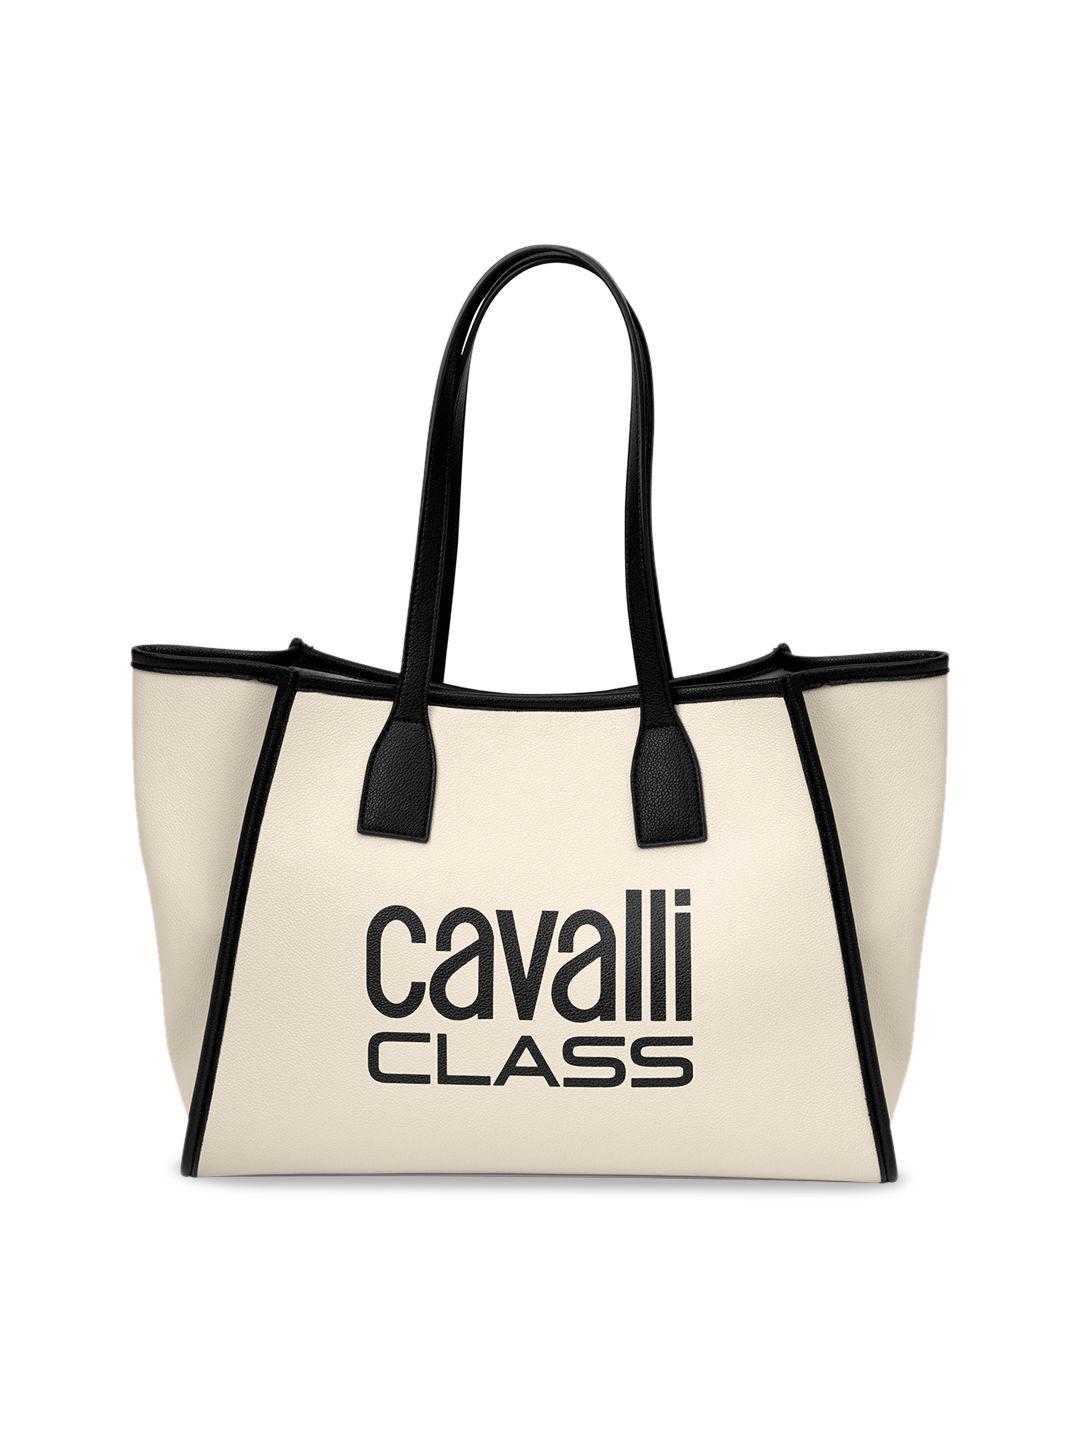 cavalli class brand logo printed shopper tote bag